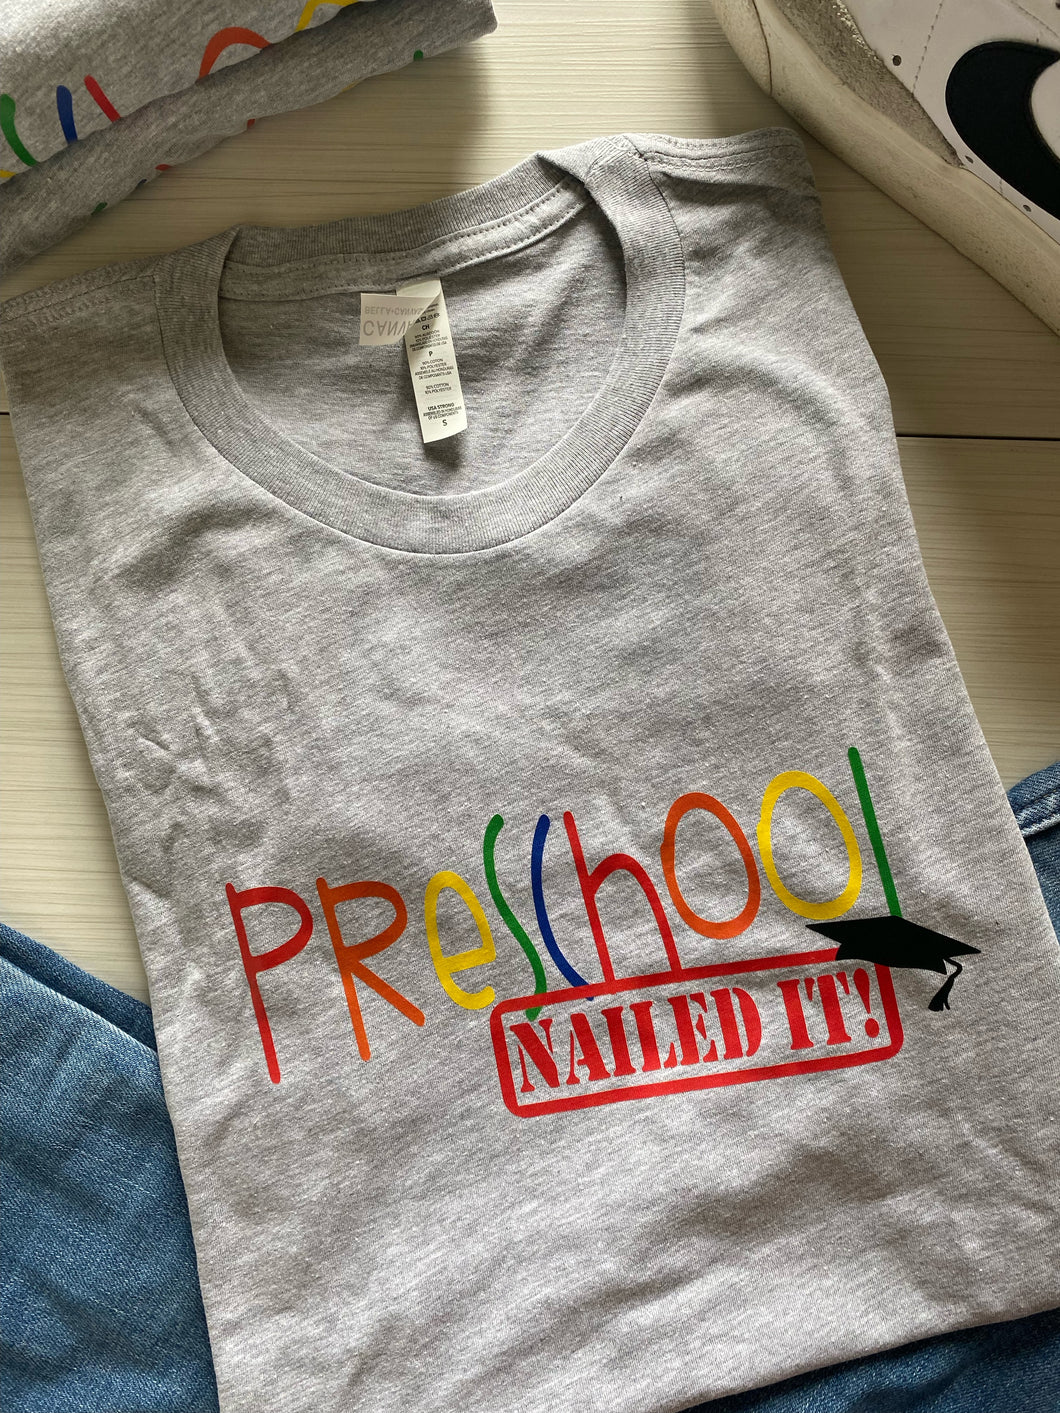 Preschool (Nailed It!)